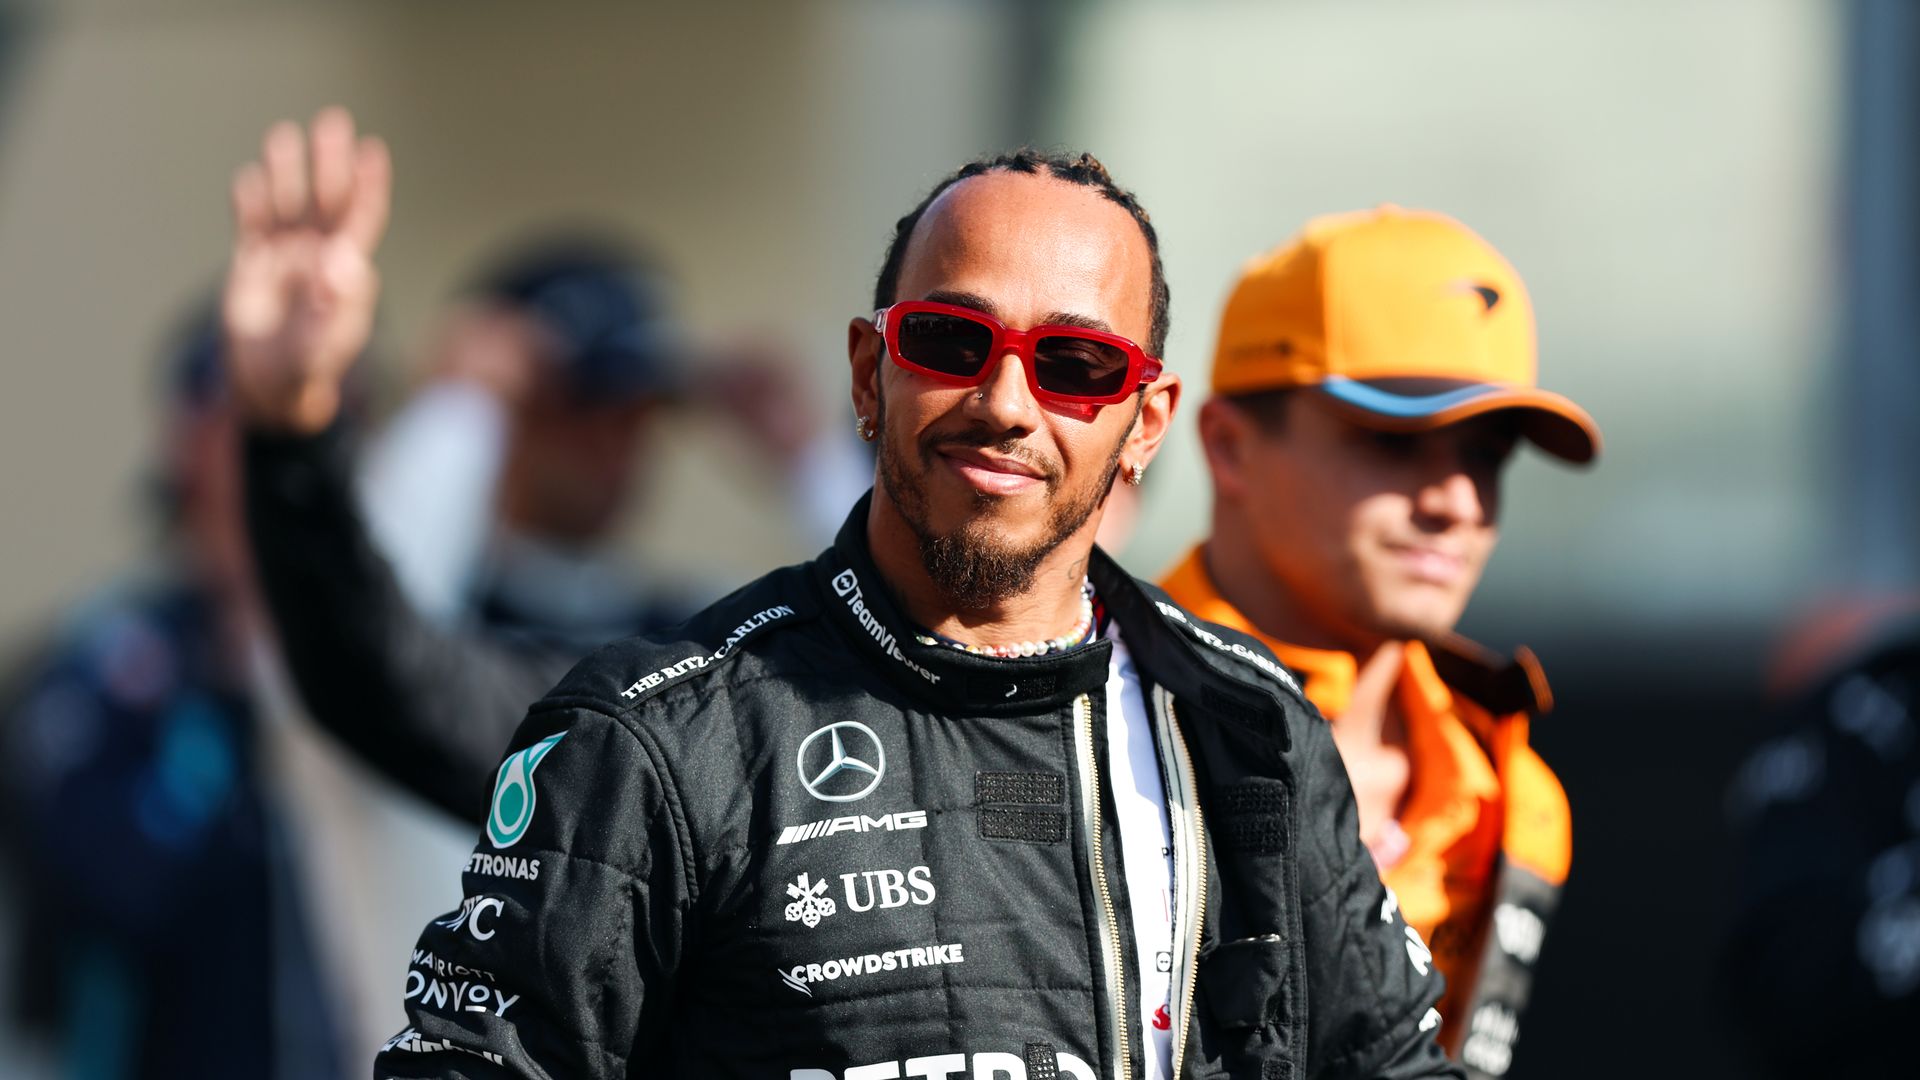 Lewis Hamilton walks in the Paddock prior to the F1 Grand Prix of Abu Dhabi 